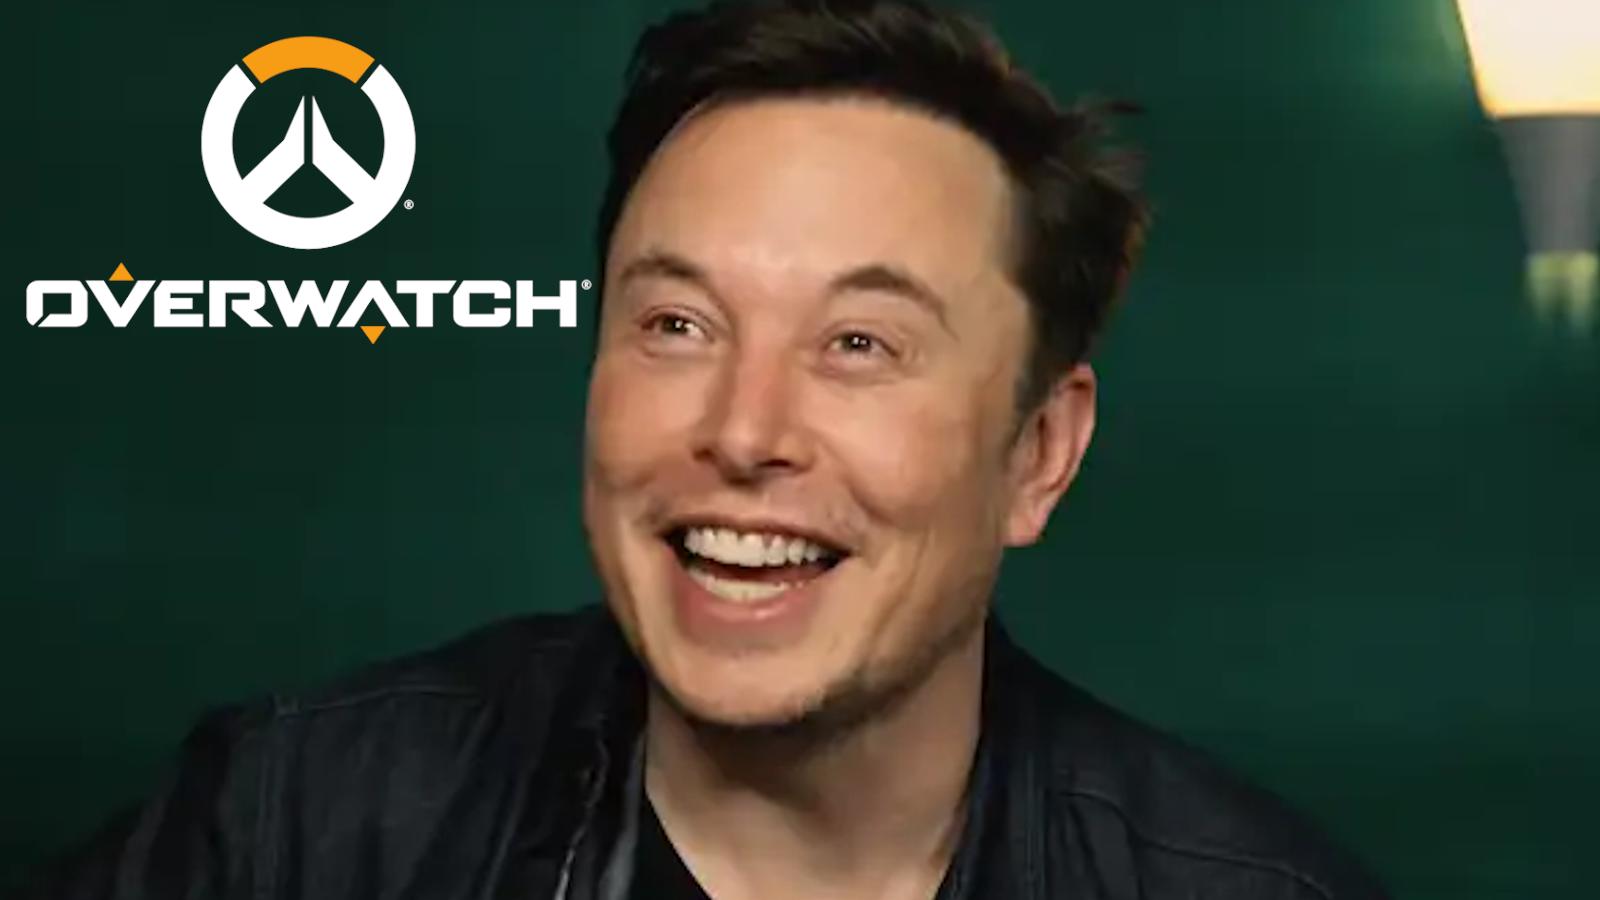 Elon Musk and Overwatch logo